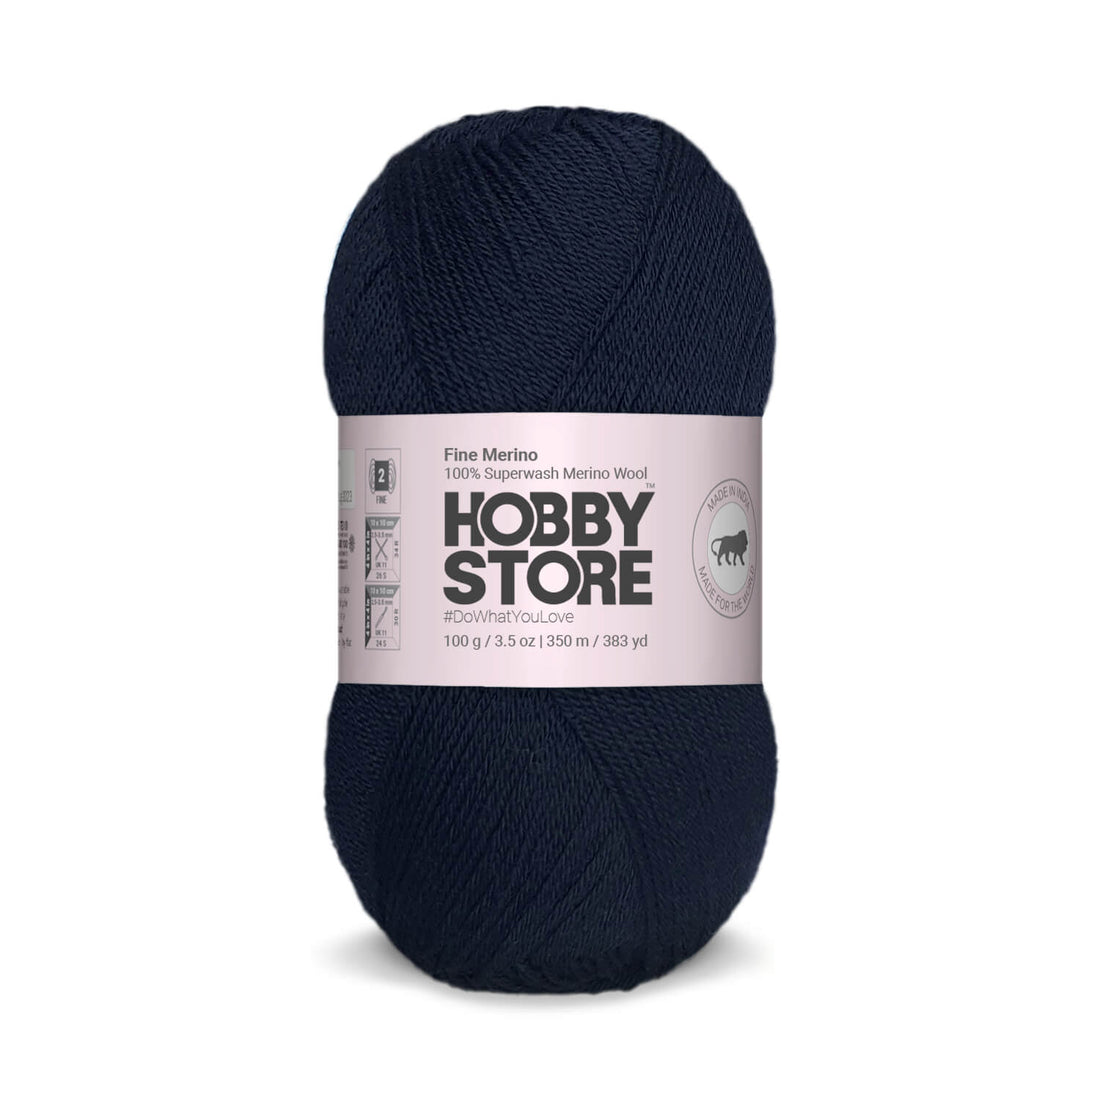 Fine Merino Wool by Hobby Store - Navy Blue FM004